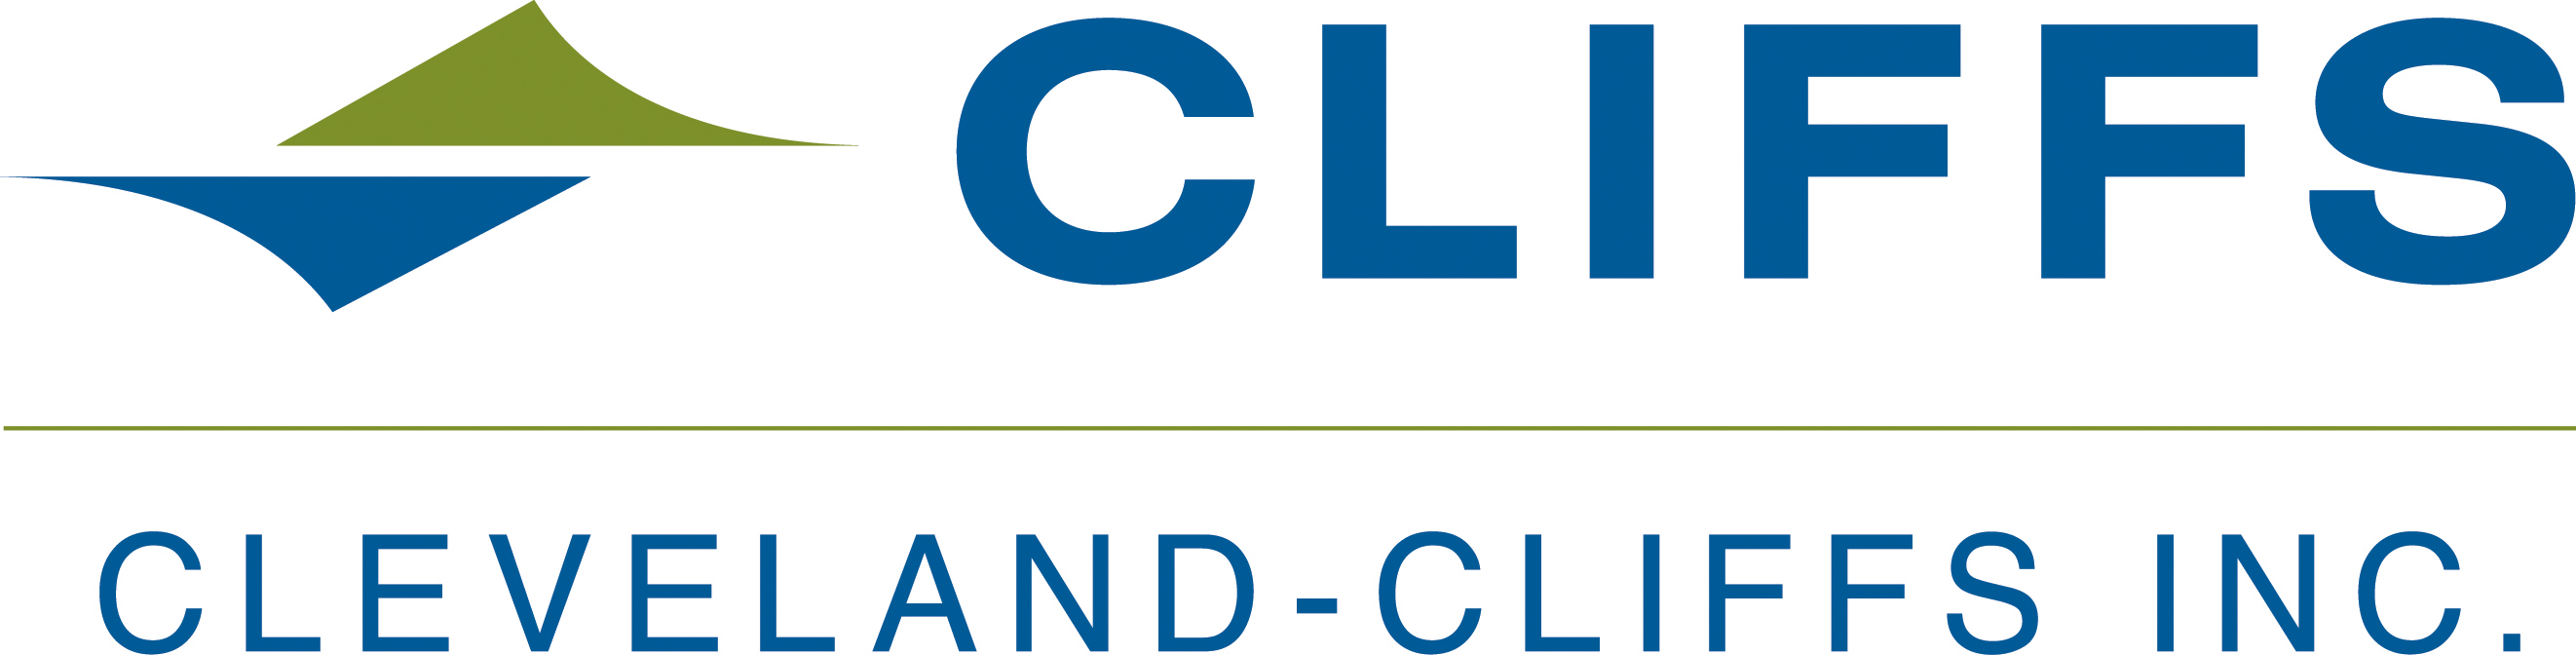 clf-cleveland-cliffs-inc-s-4-clf-cliffs-natural-resources-inc-s-4-february-14-2018